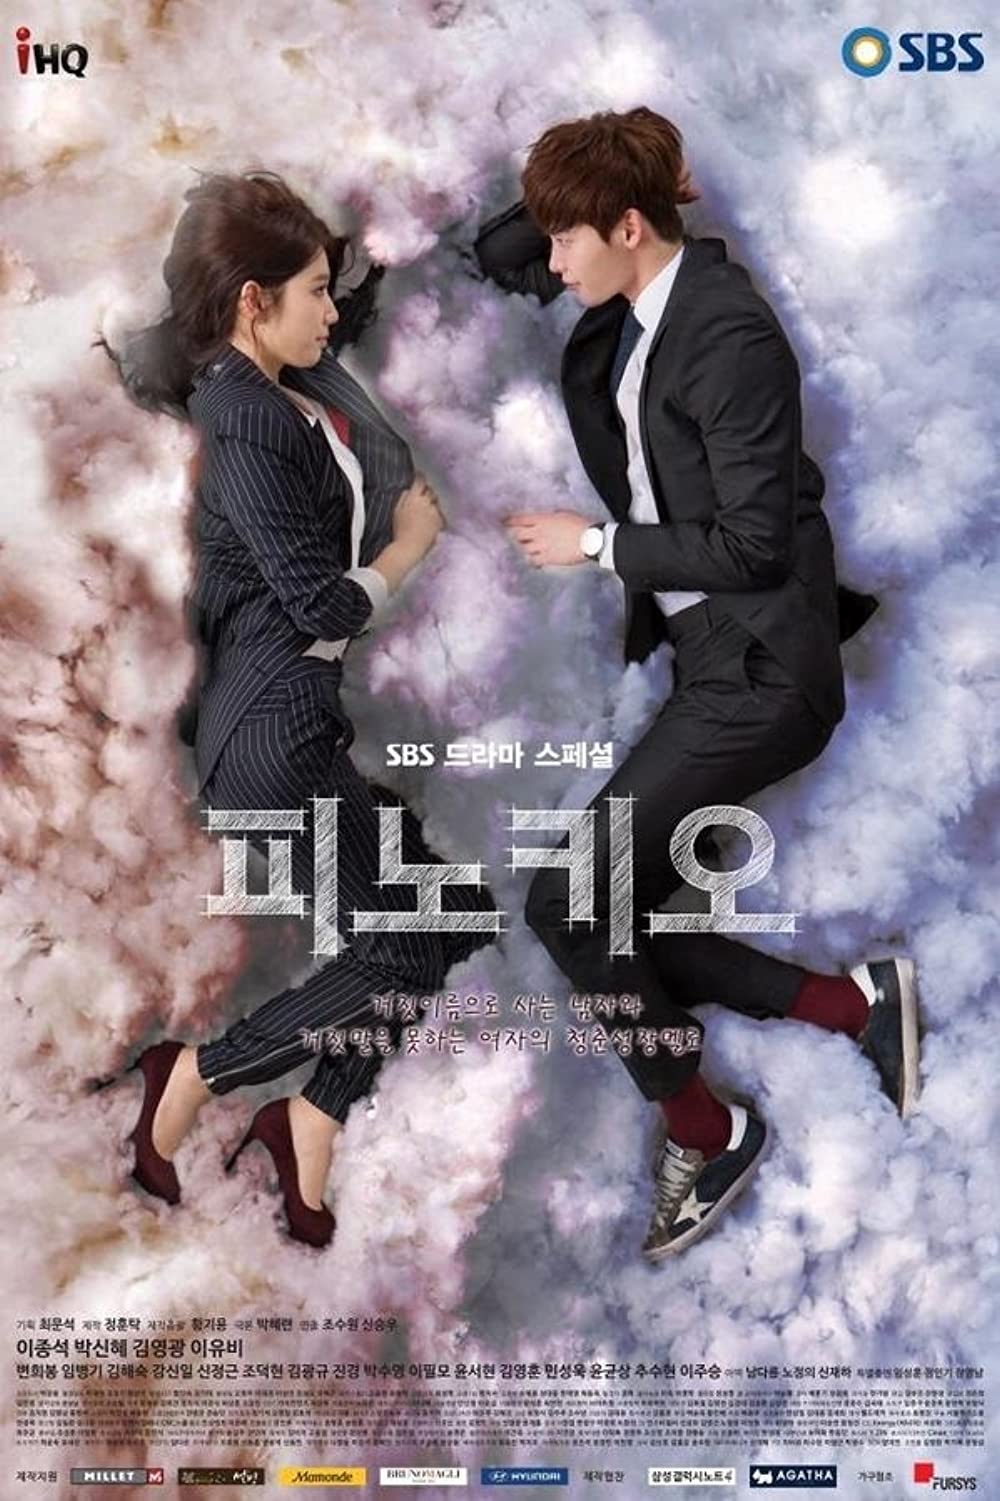 10 Highest IMDb Rated Korean Dramas You Must Watch